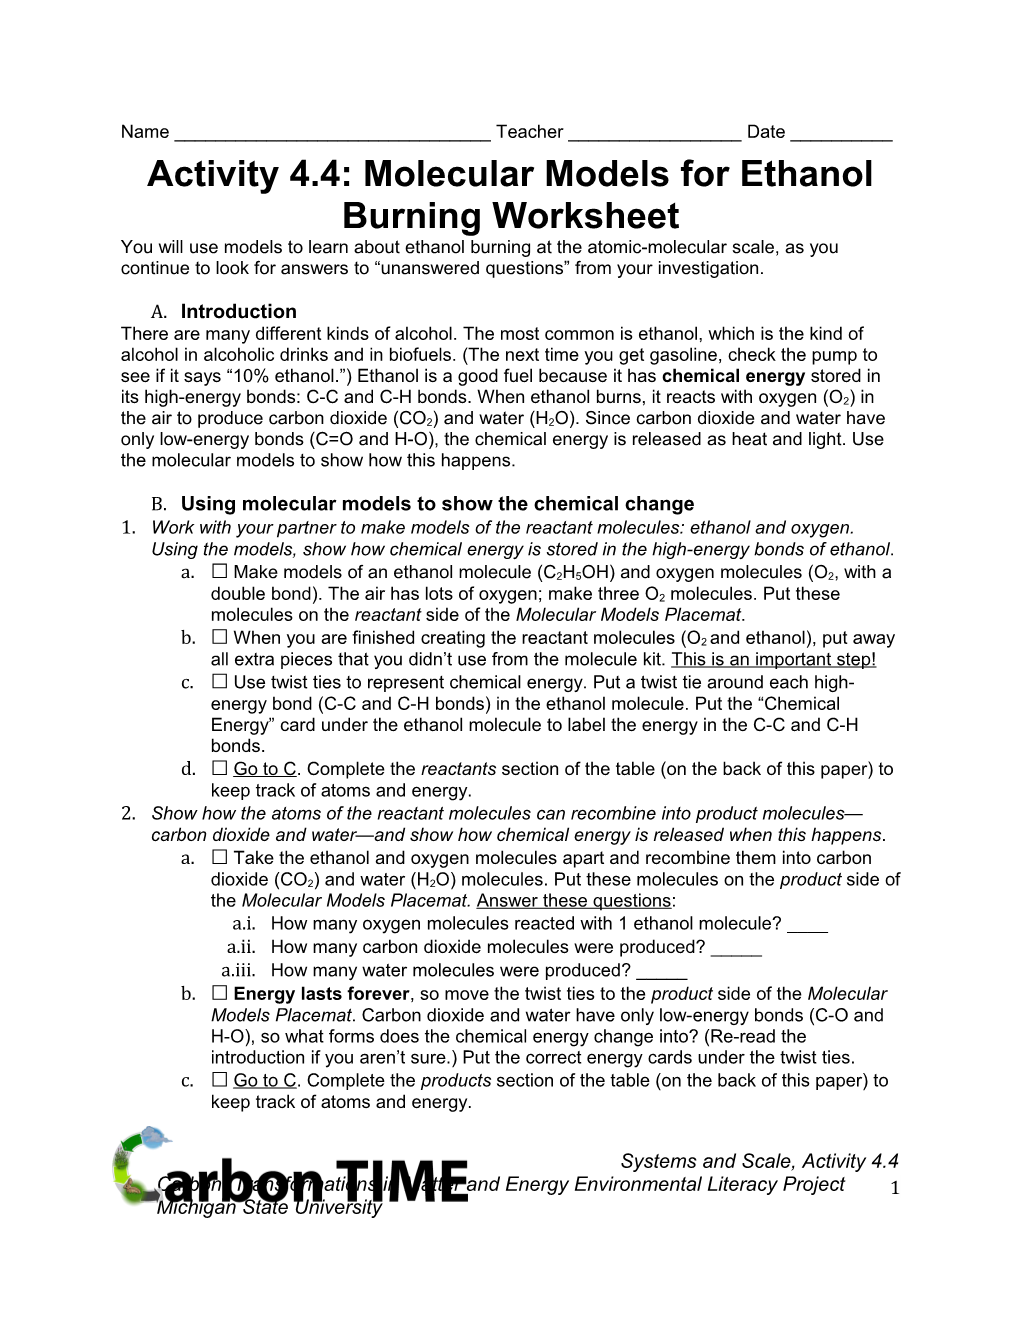 Activity 4.4: Molecular Models for Ethanol Burning Worksheet